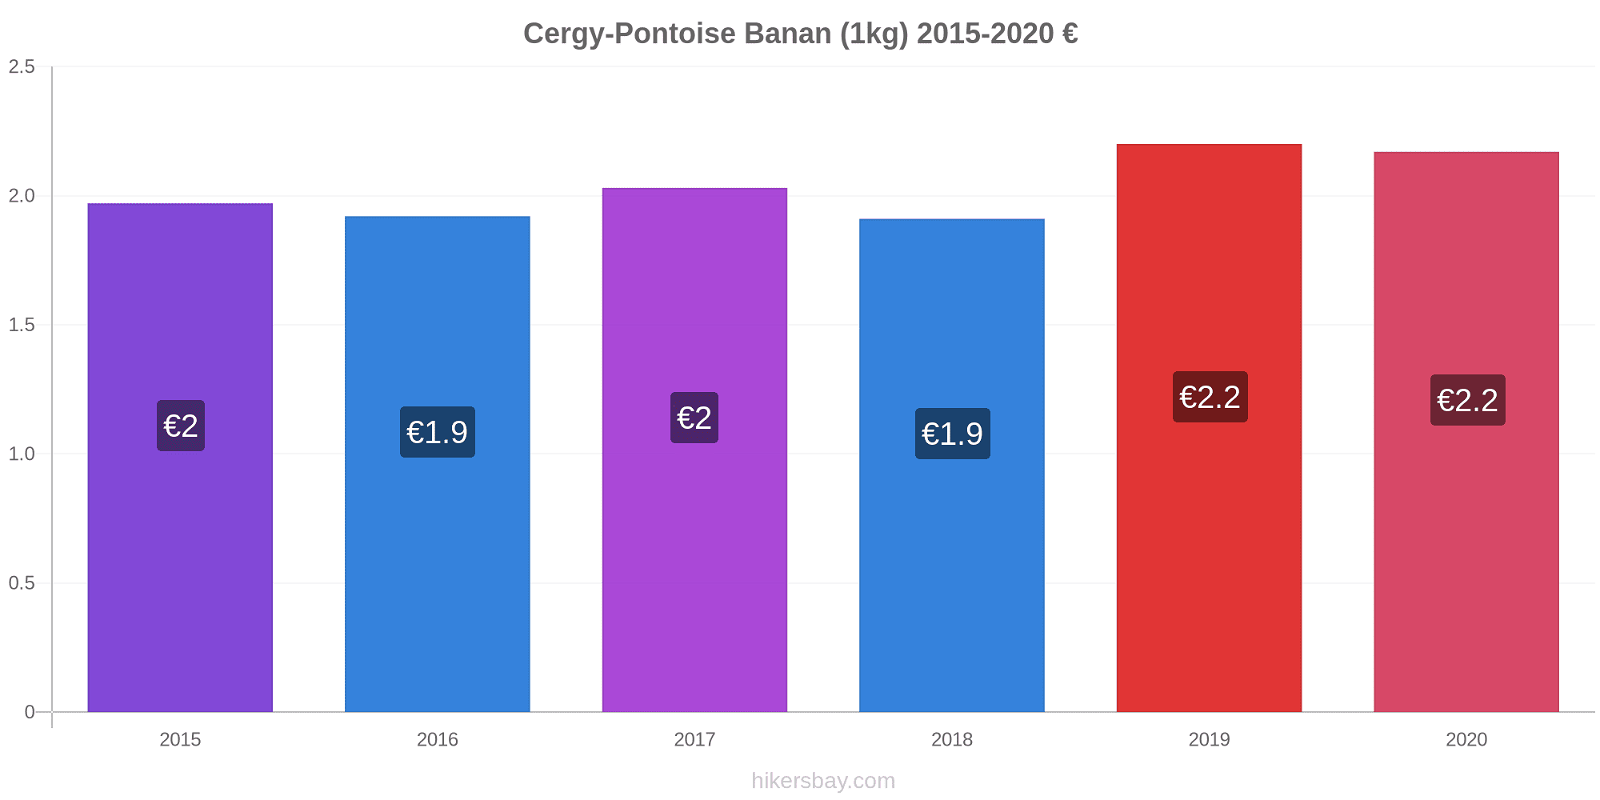 Cergy-Pontoise prisendringer Banan (1kg) hikersbay.com